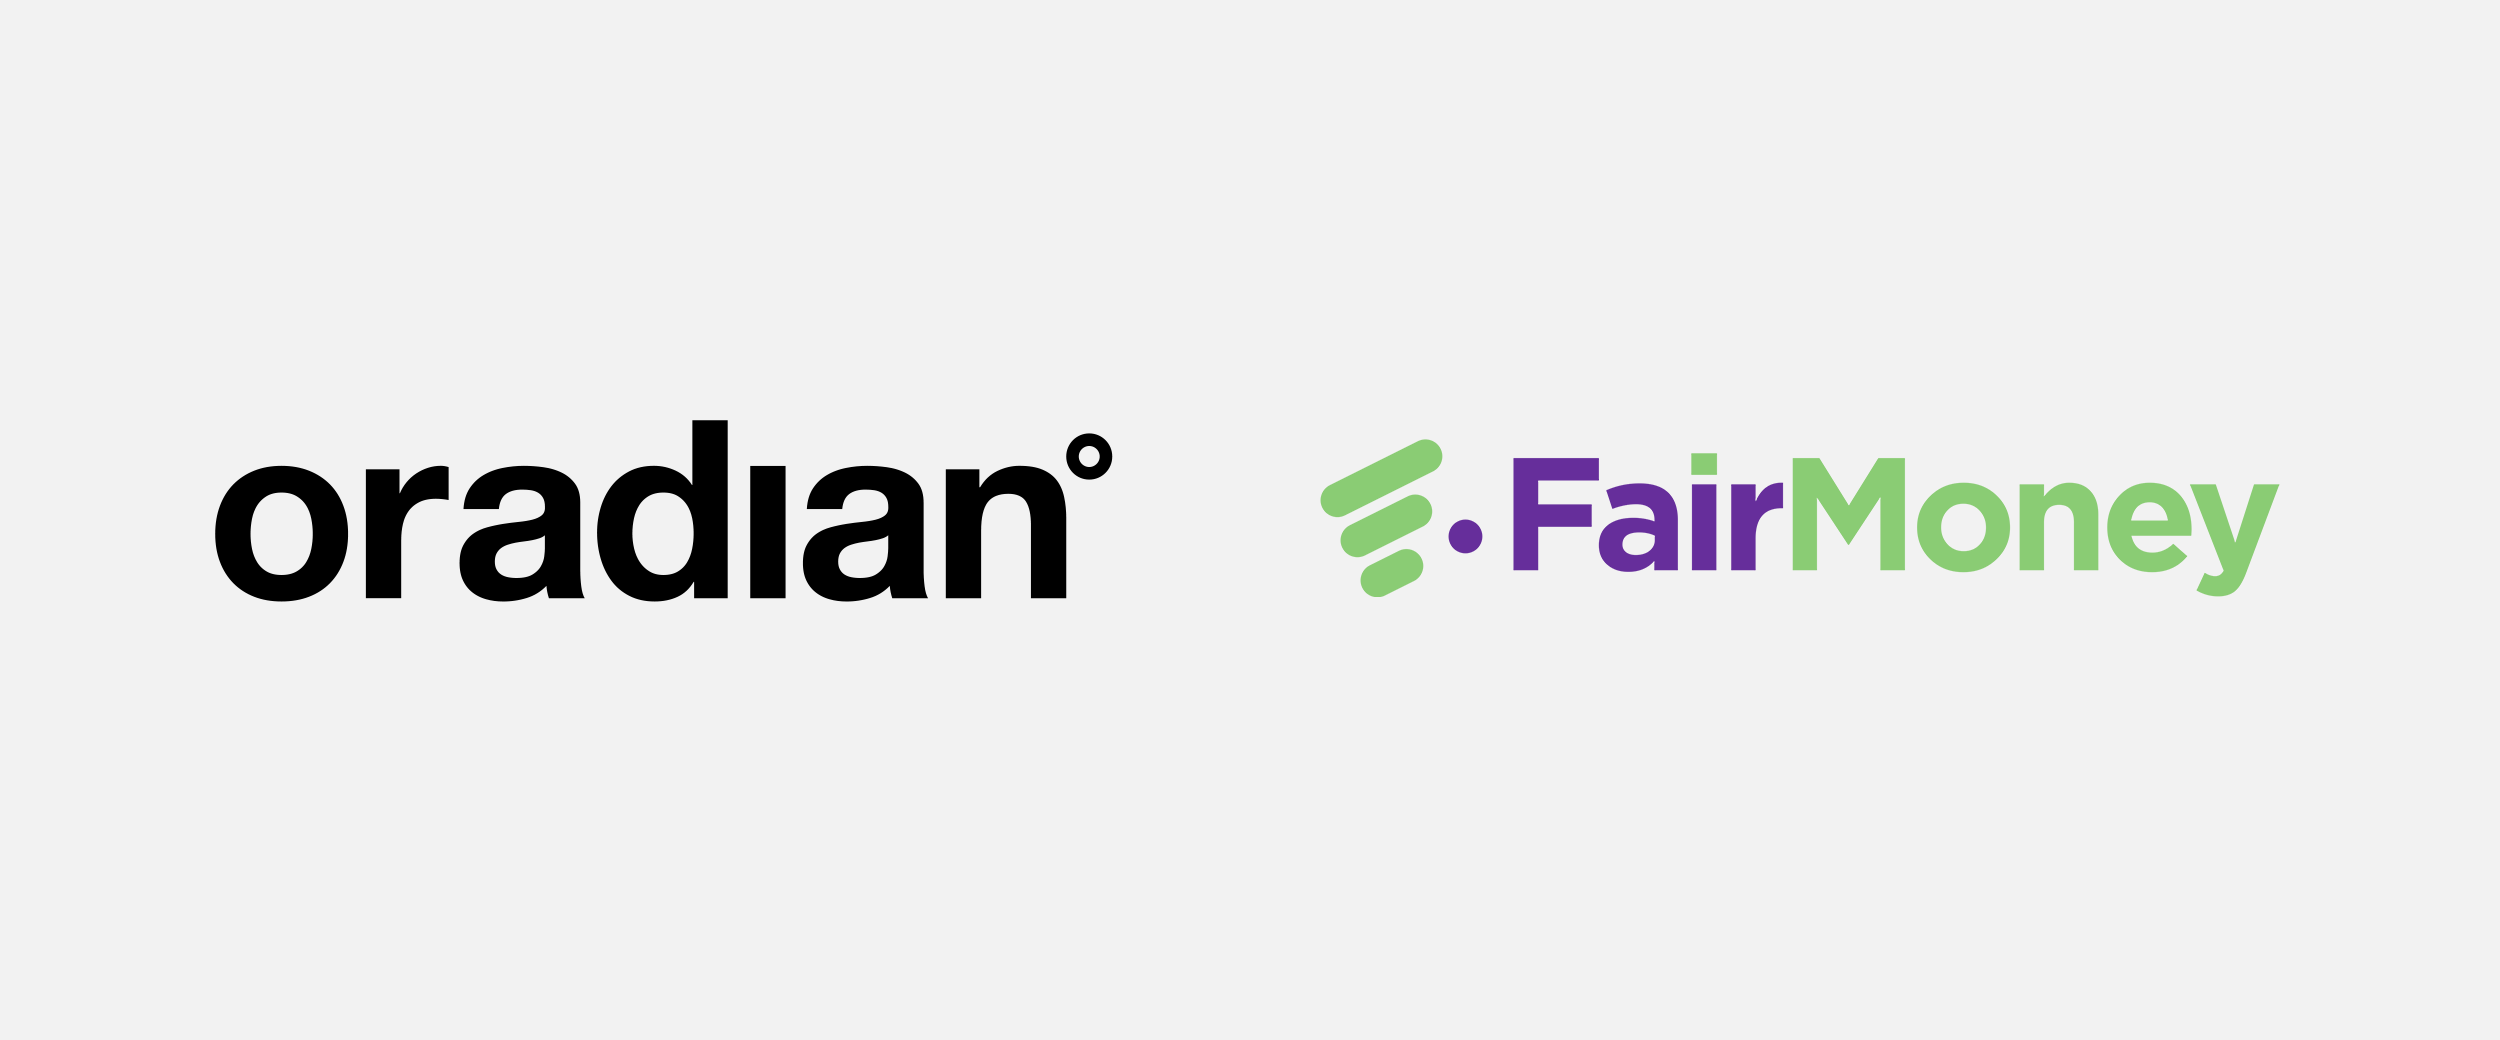 Oradian and Fairmoney's logos next to each other